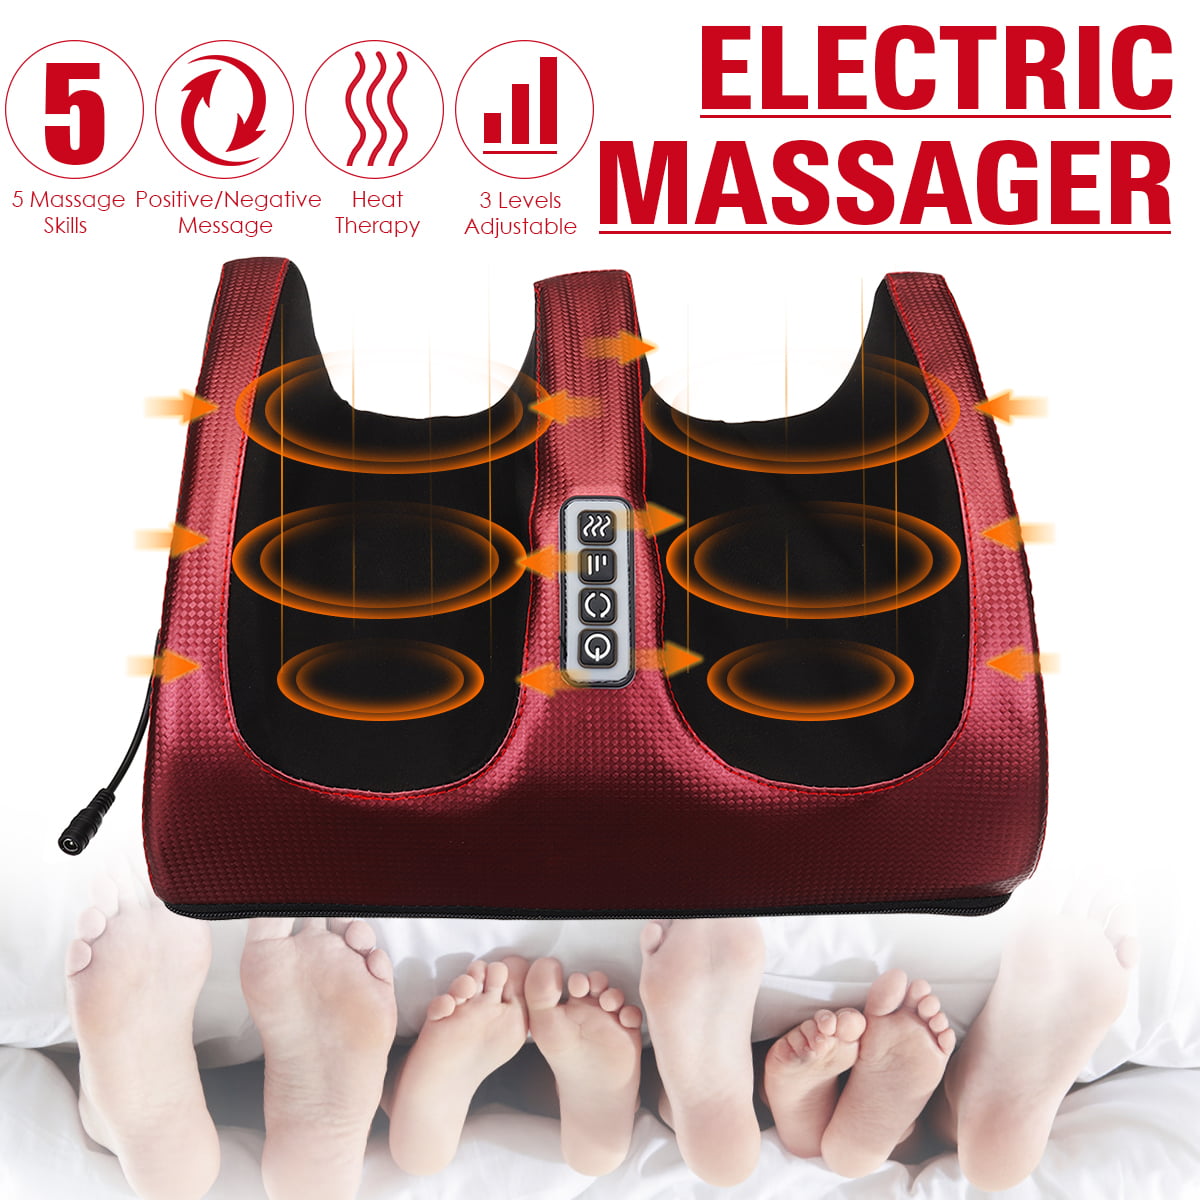 Electric Foot Massager With Heat Shiatsu Kneading Massage